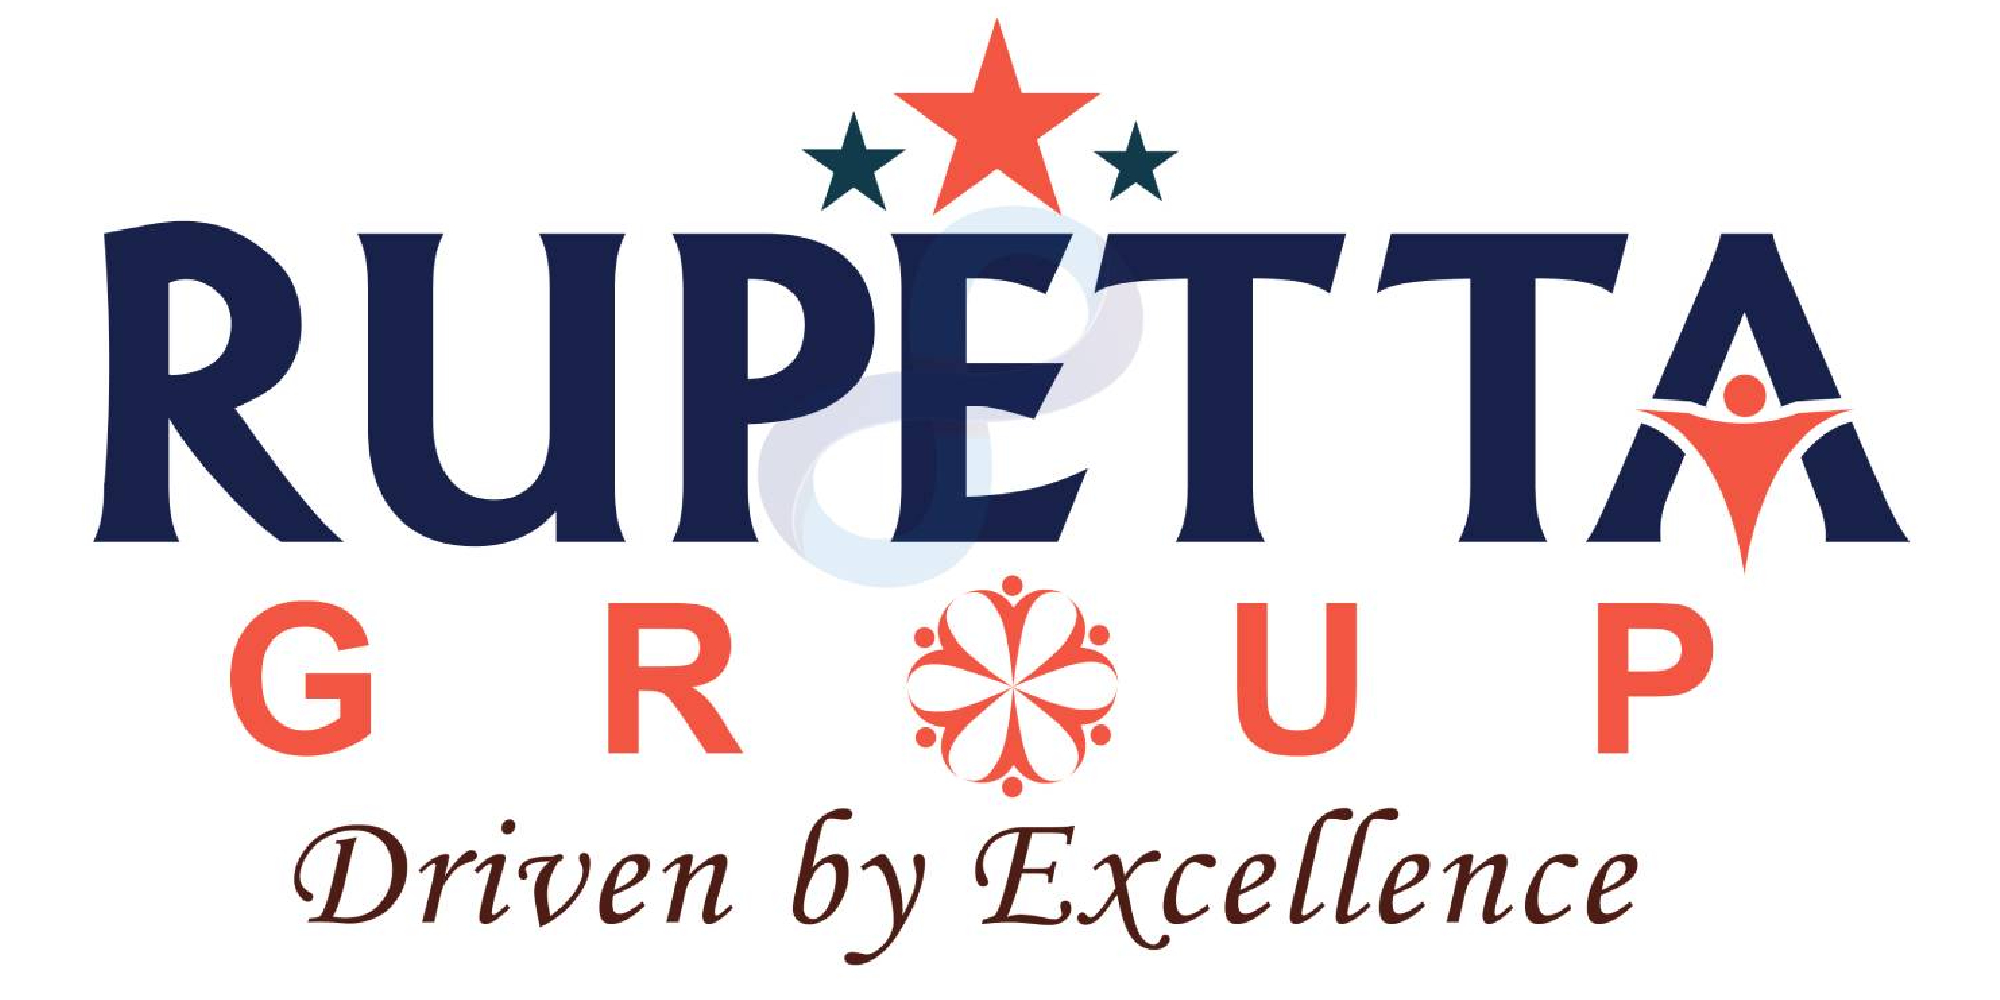 Rupetta Group